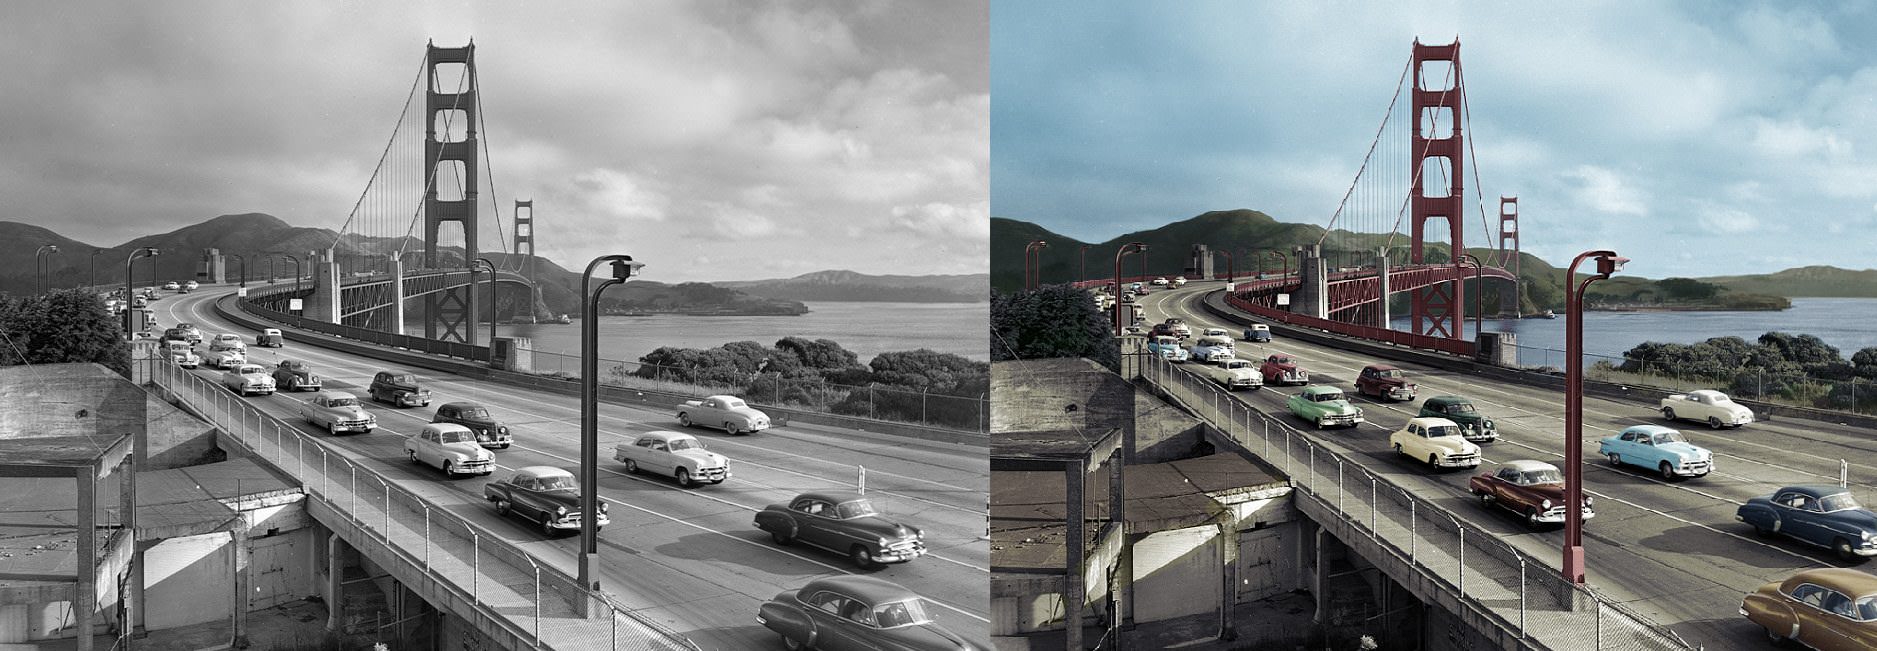 Crossing the Golden Gate Bridge in San Fransisco, US in 1940.